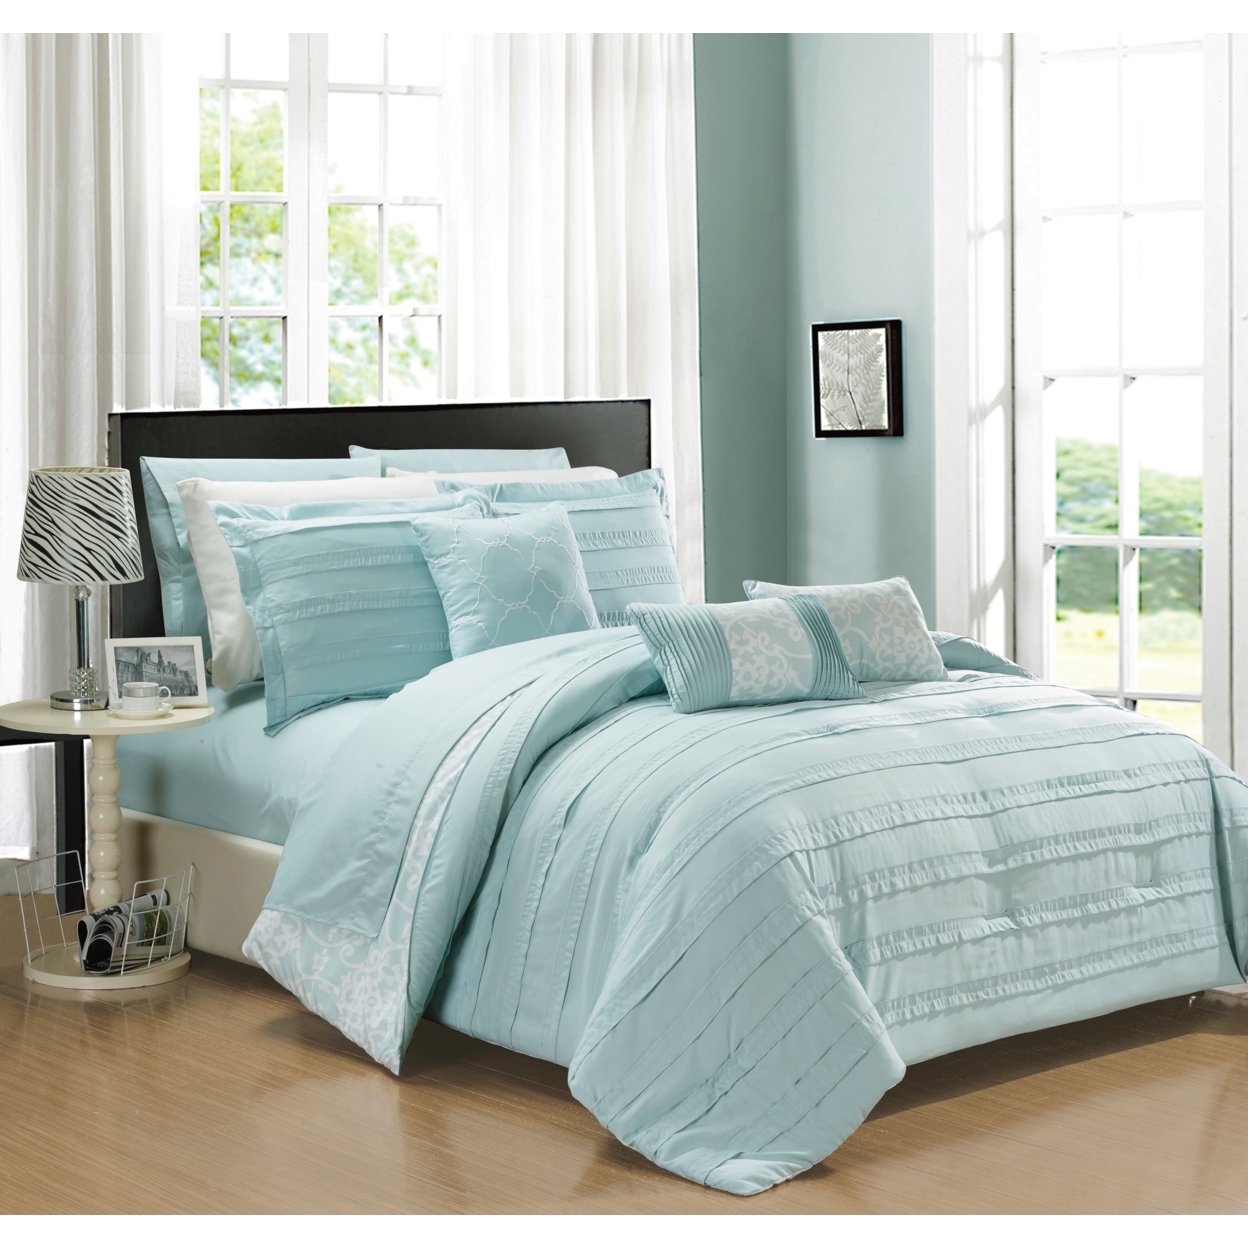 10-Piece Reversible Bed In A Bag Comforter & Sheet Set, Multiple Colors - Grey, King